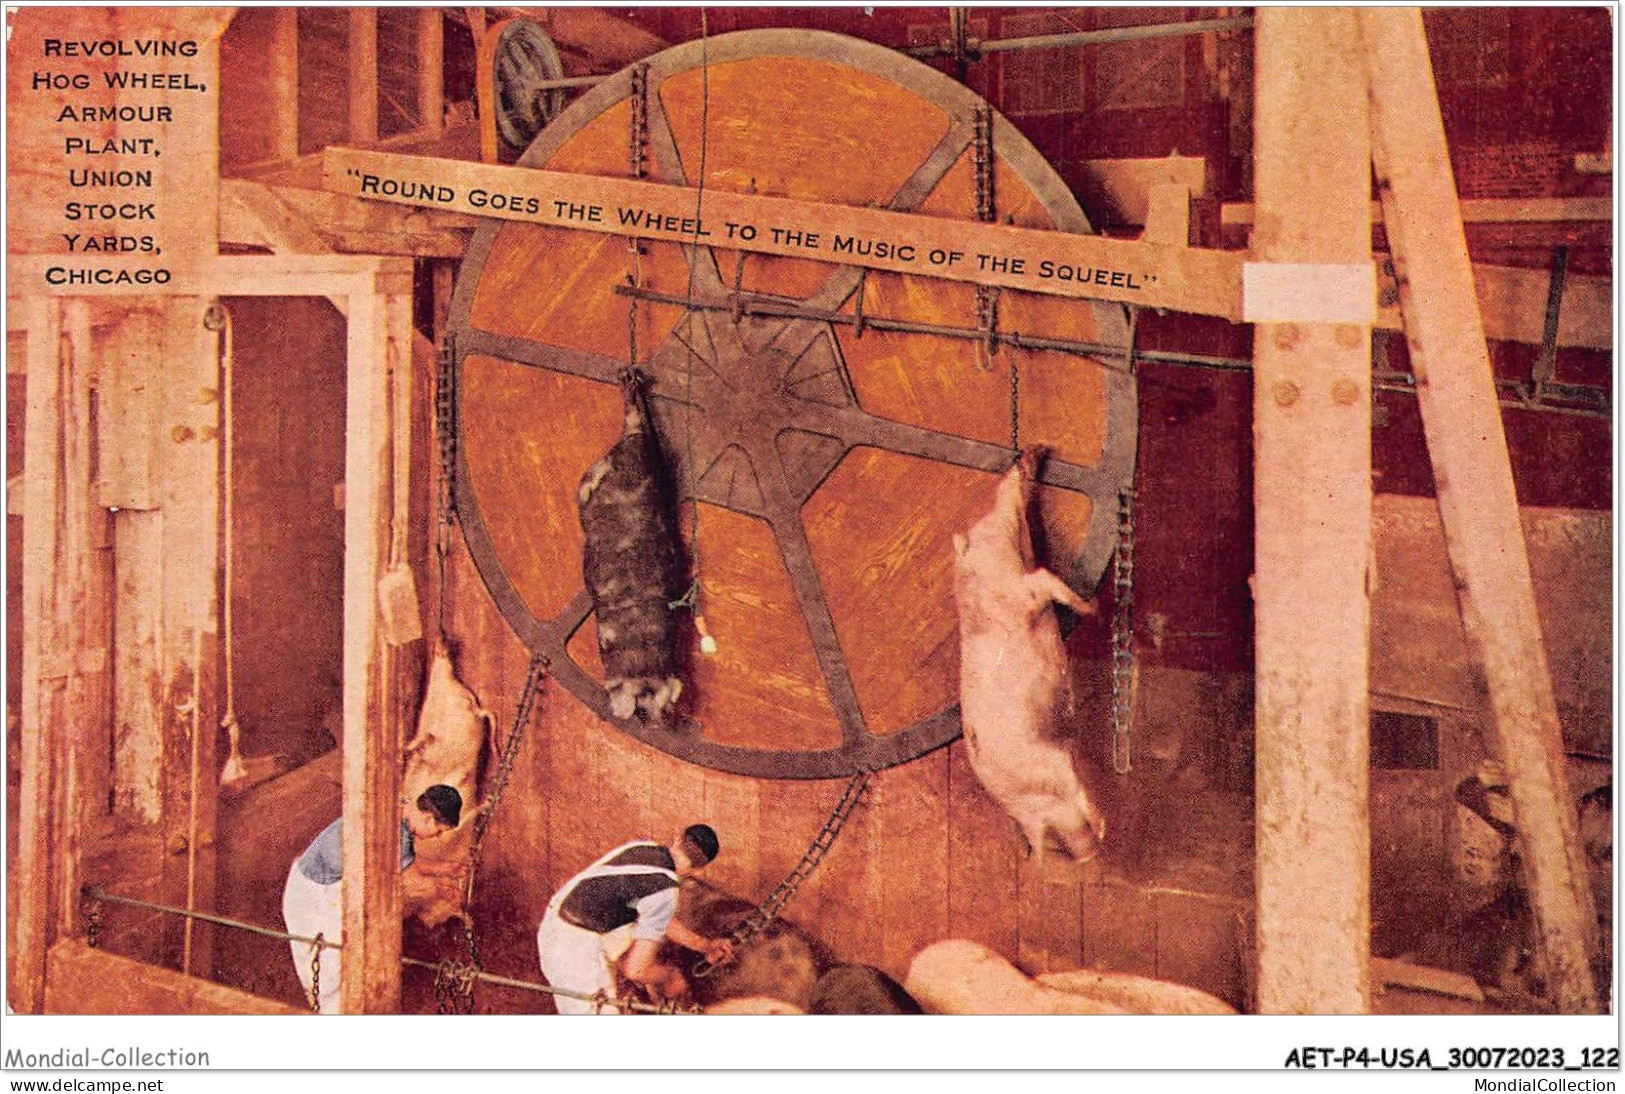 AETP4-USA-0335 - CHICAGO - Revolving Hog Wheel - Plant - Union Stock Yards - Chicago